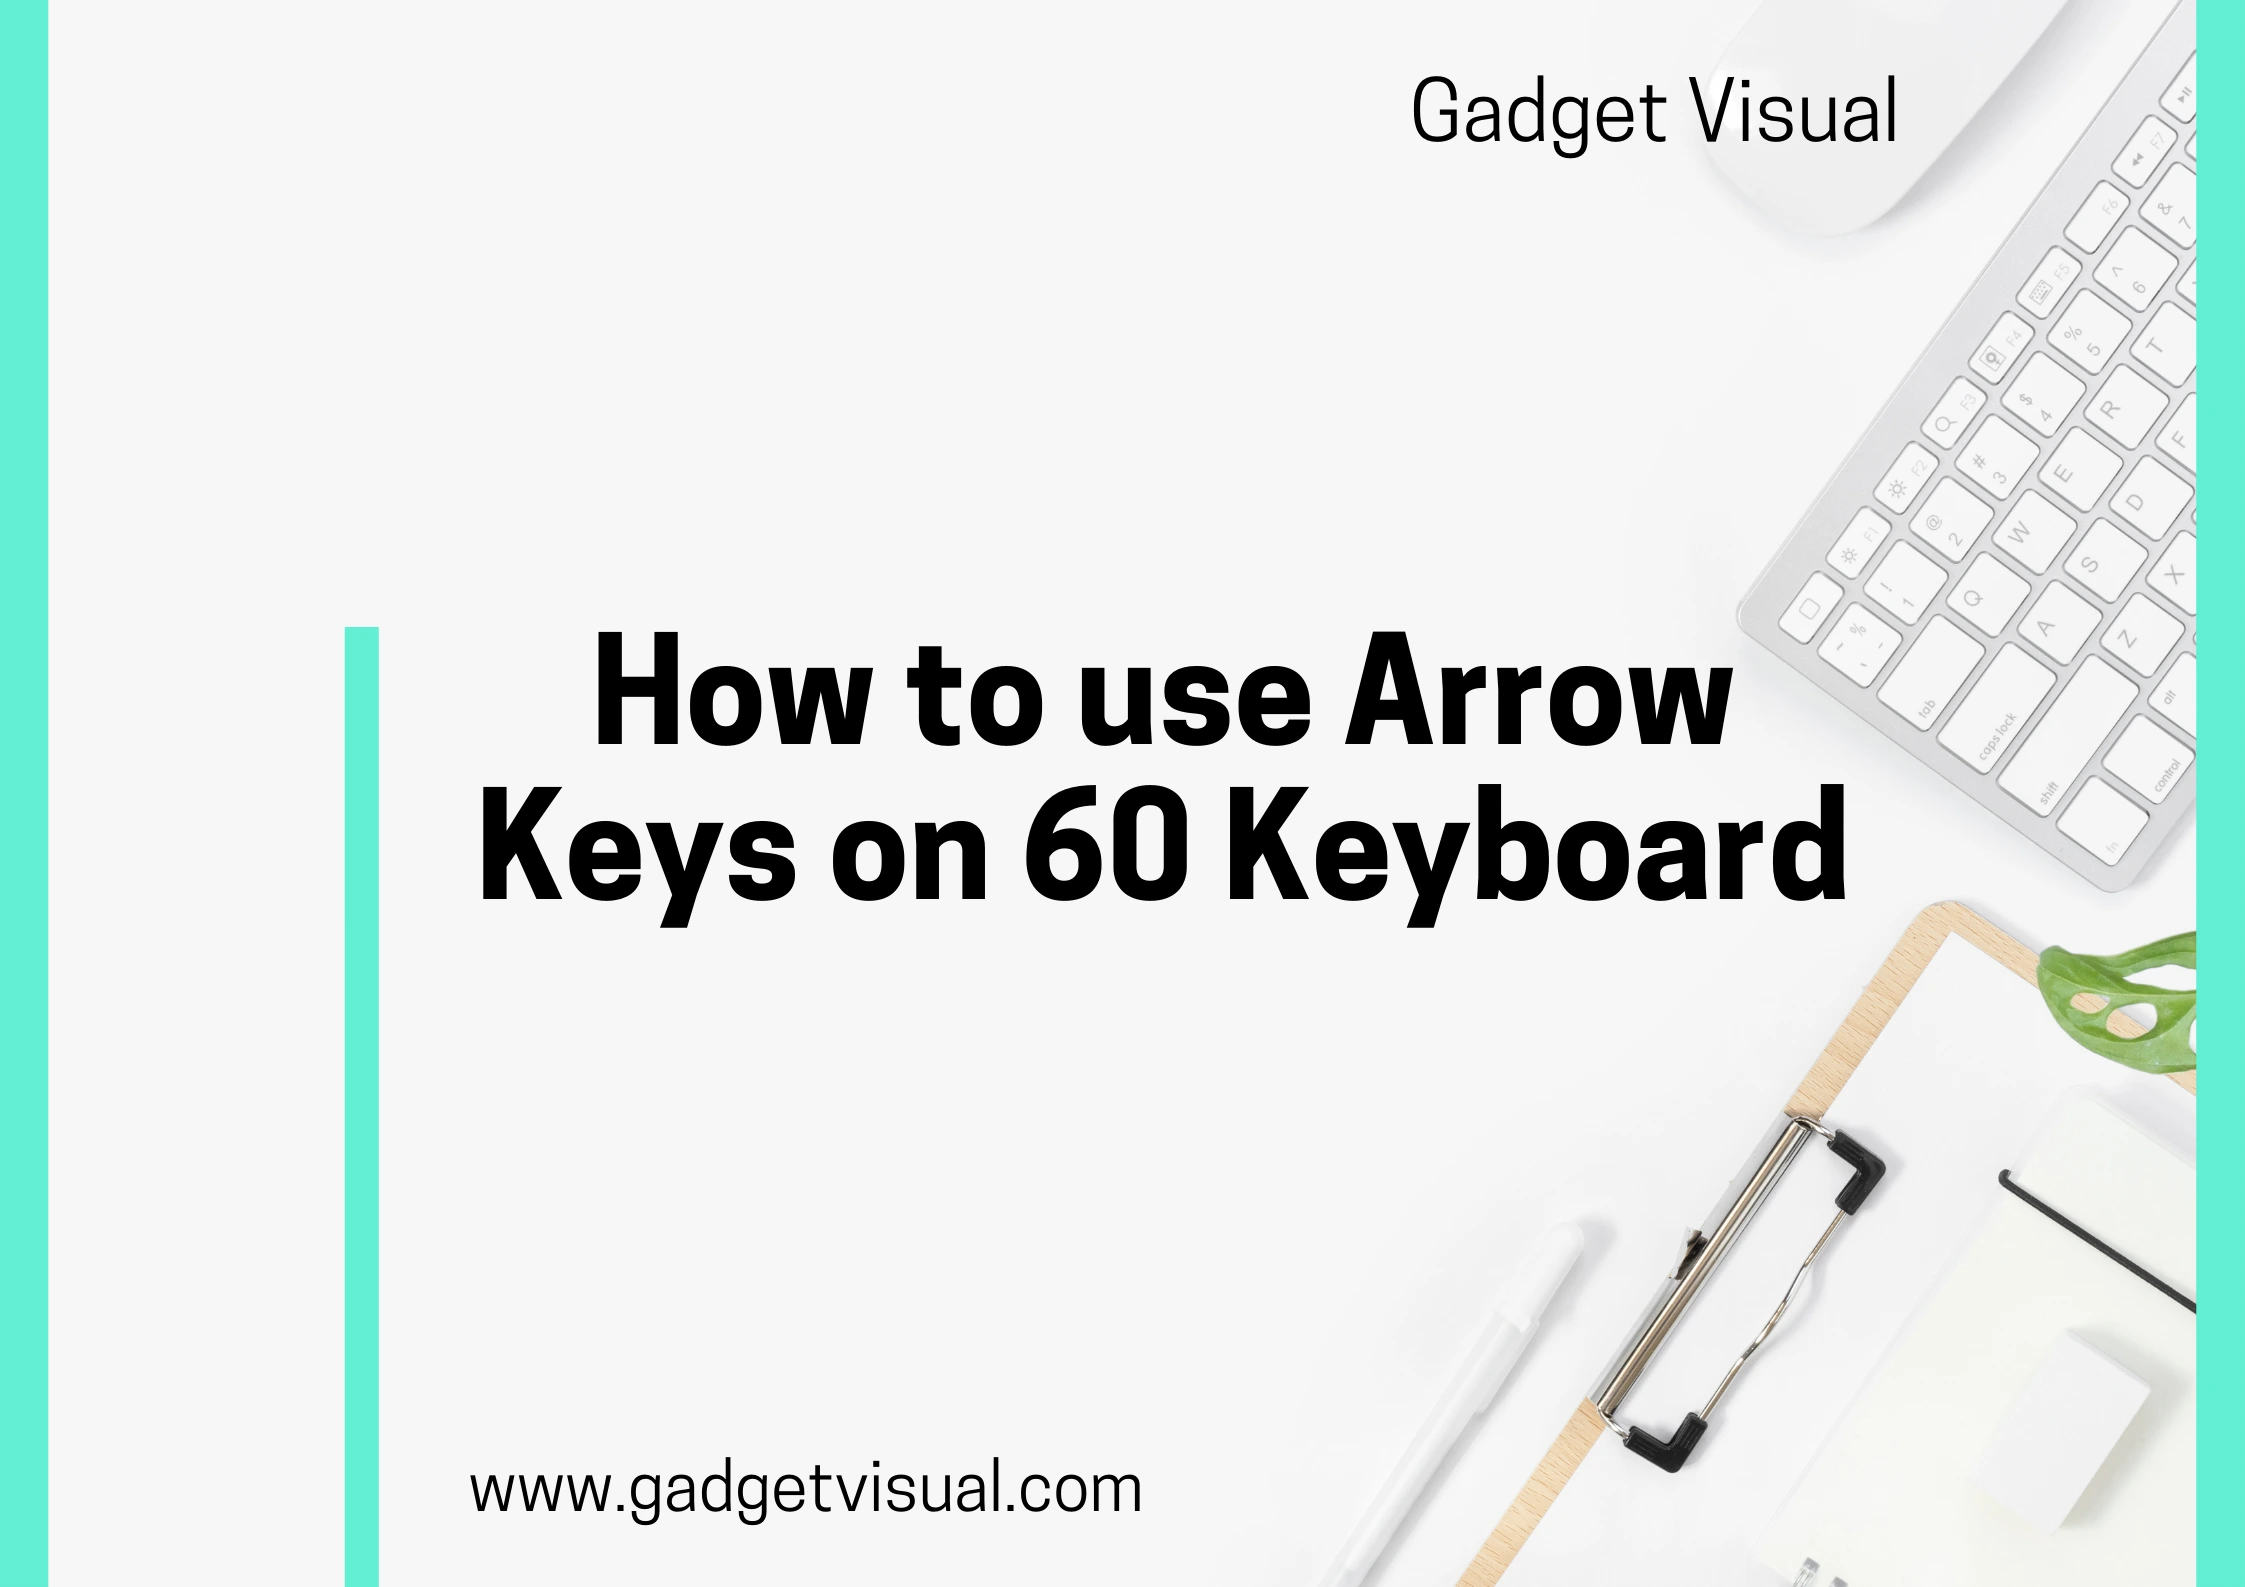 How to use arrow keys on 60 Keyboard